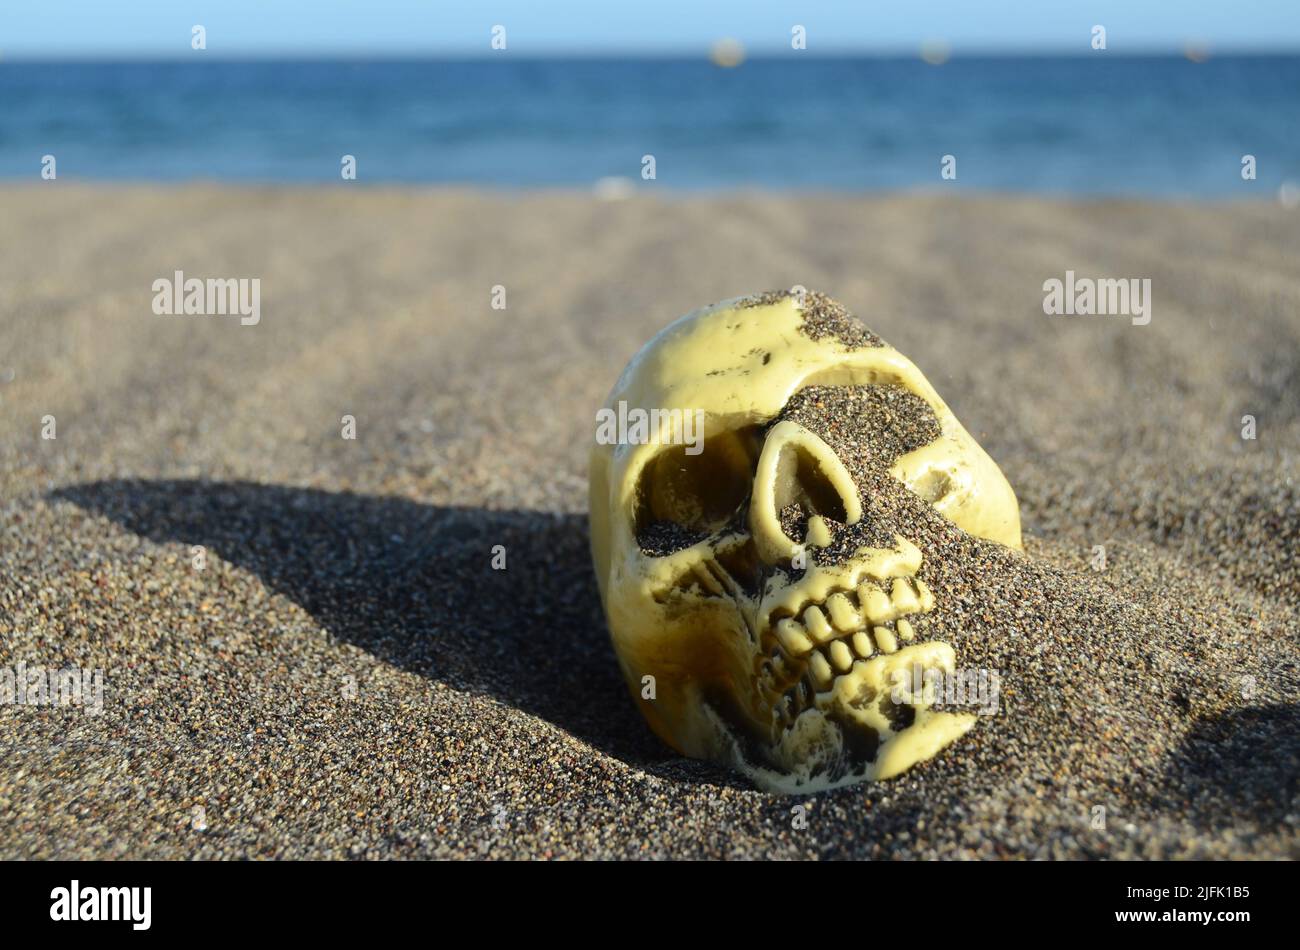 https://c8.alamy.com/comp/2JFK1B5/human-skull-on-the-sand-beach-near-ocean-2JFK1B5.jpg